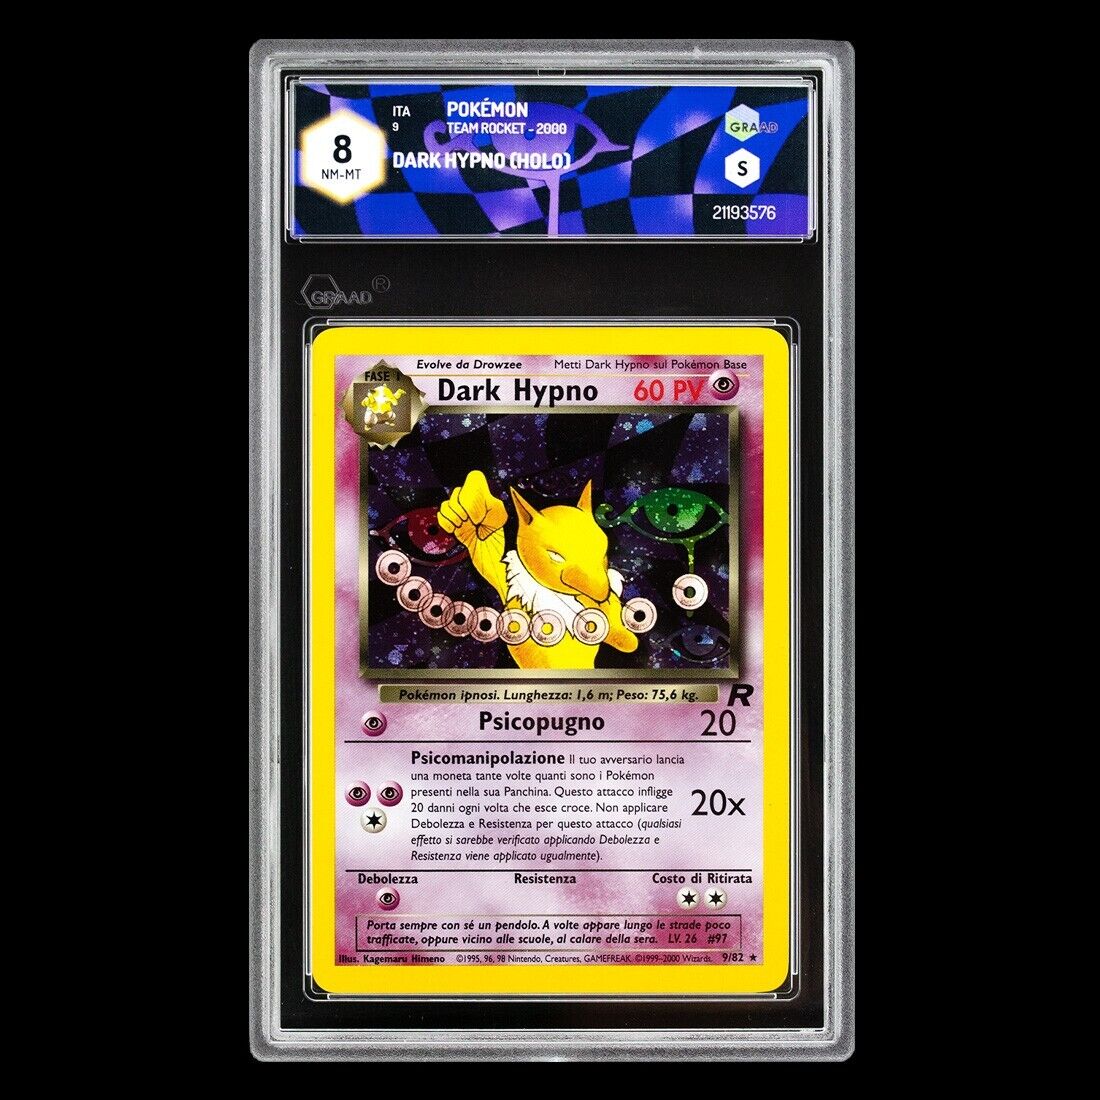 Pokémon Card - Dark Hypno 9/82 - Team Rocket 2000 - NM/MT 8